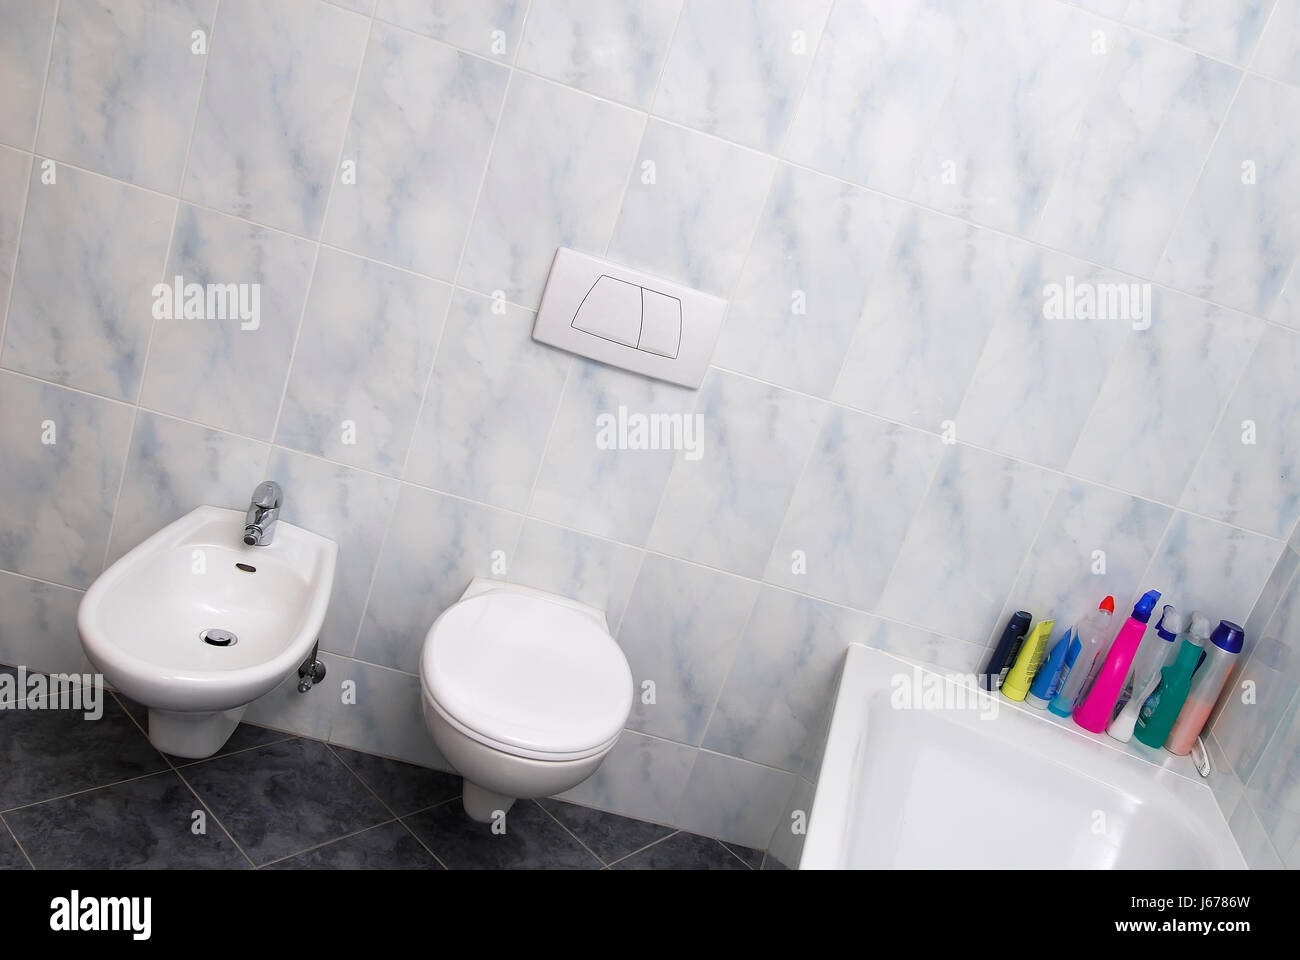 flow ceramic tiles toilet washroom bidet bathroom flow ceramic tiles toilet Stock Photo